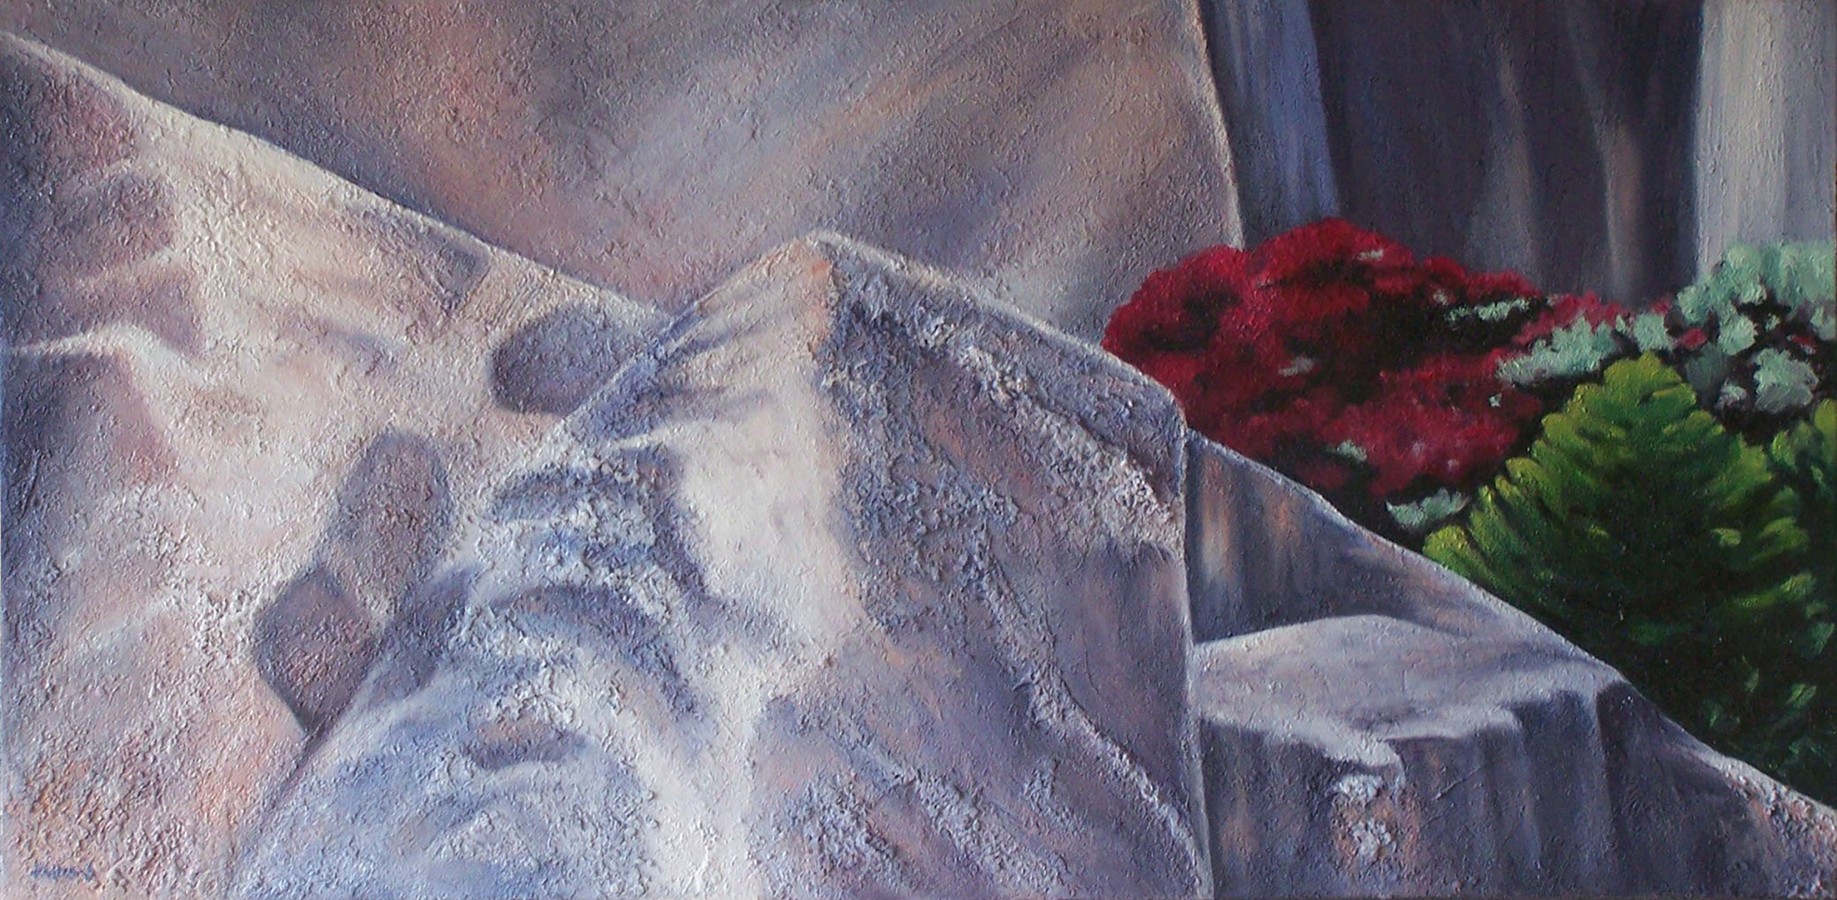 Pohutukawa on Cliffs
Oil on canvas Sold